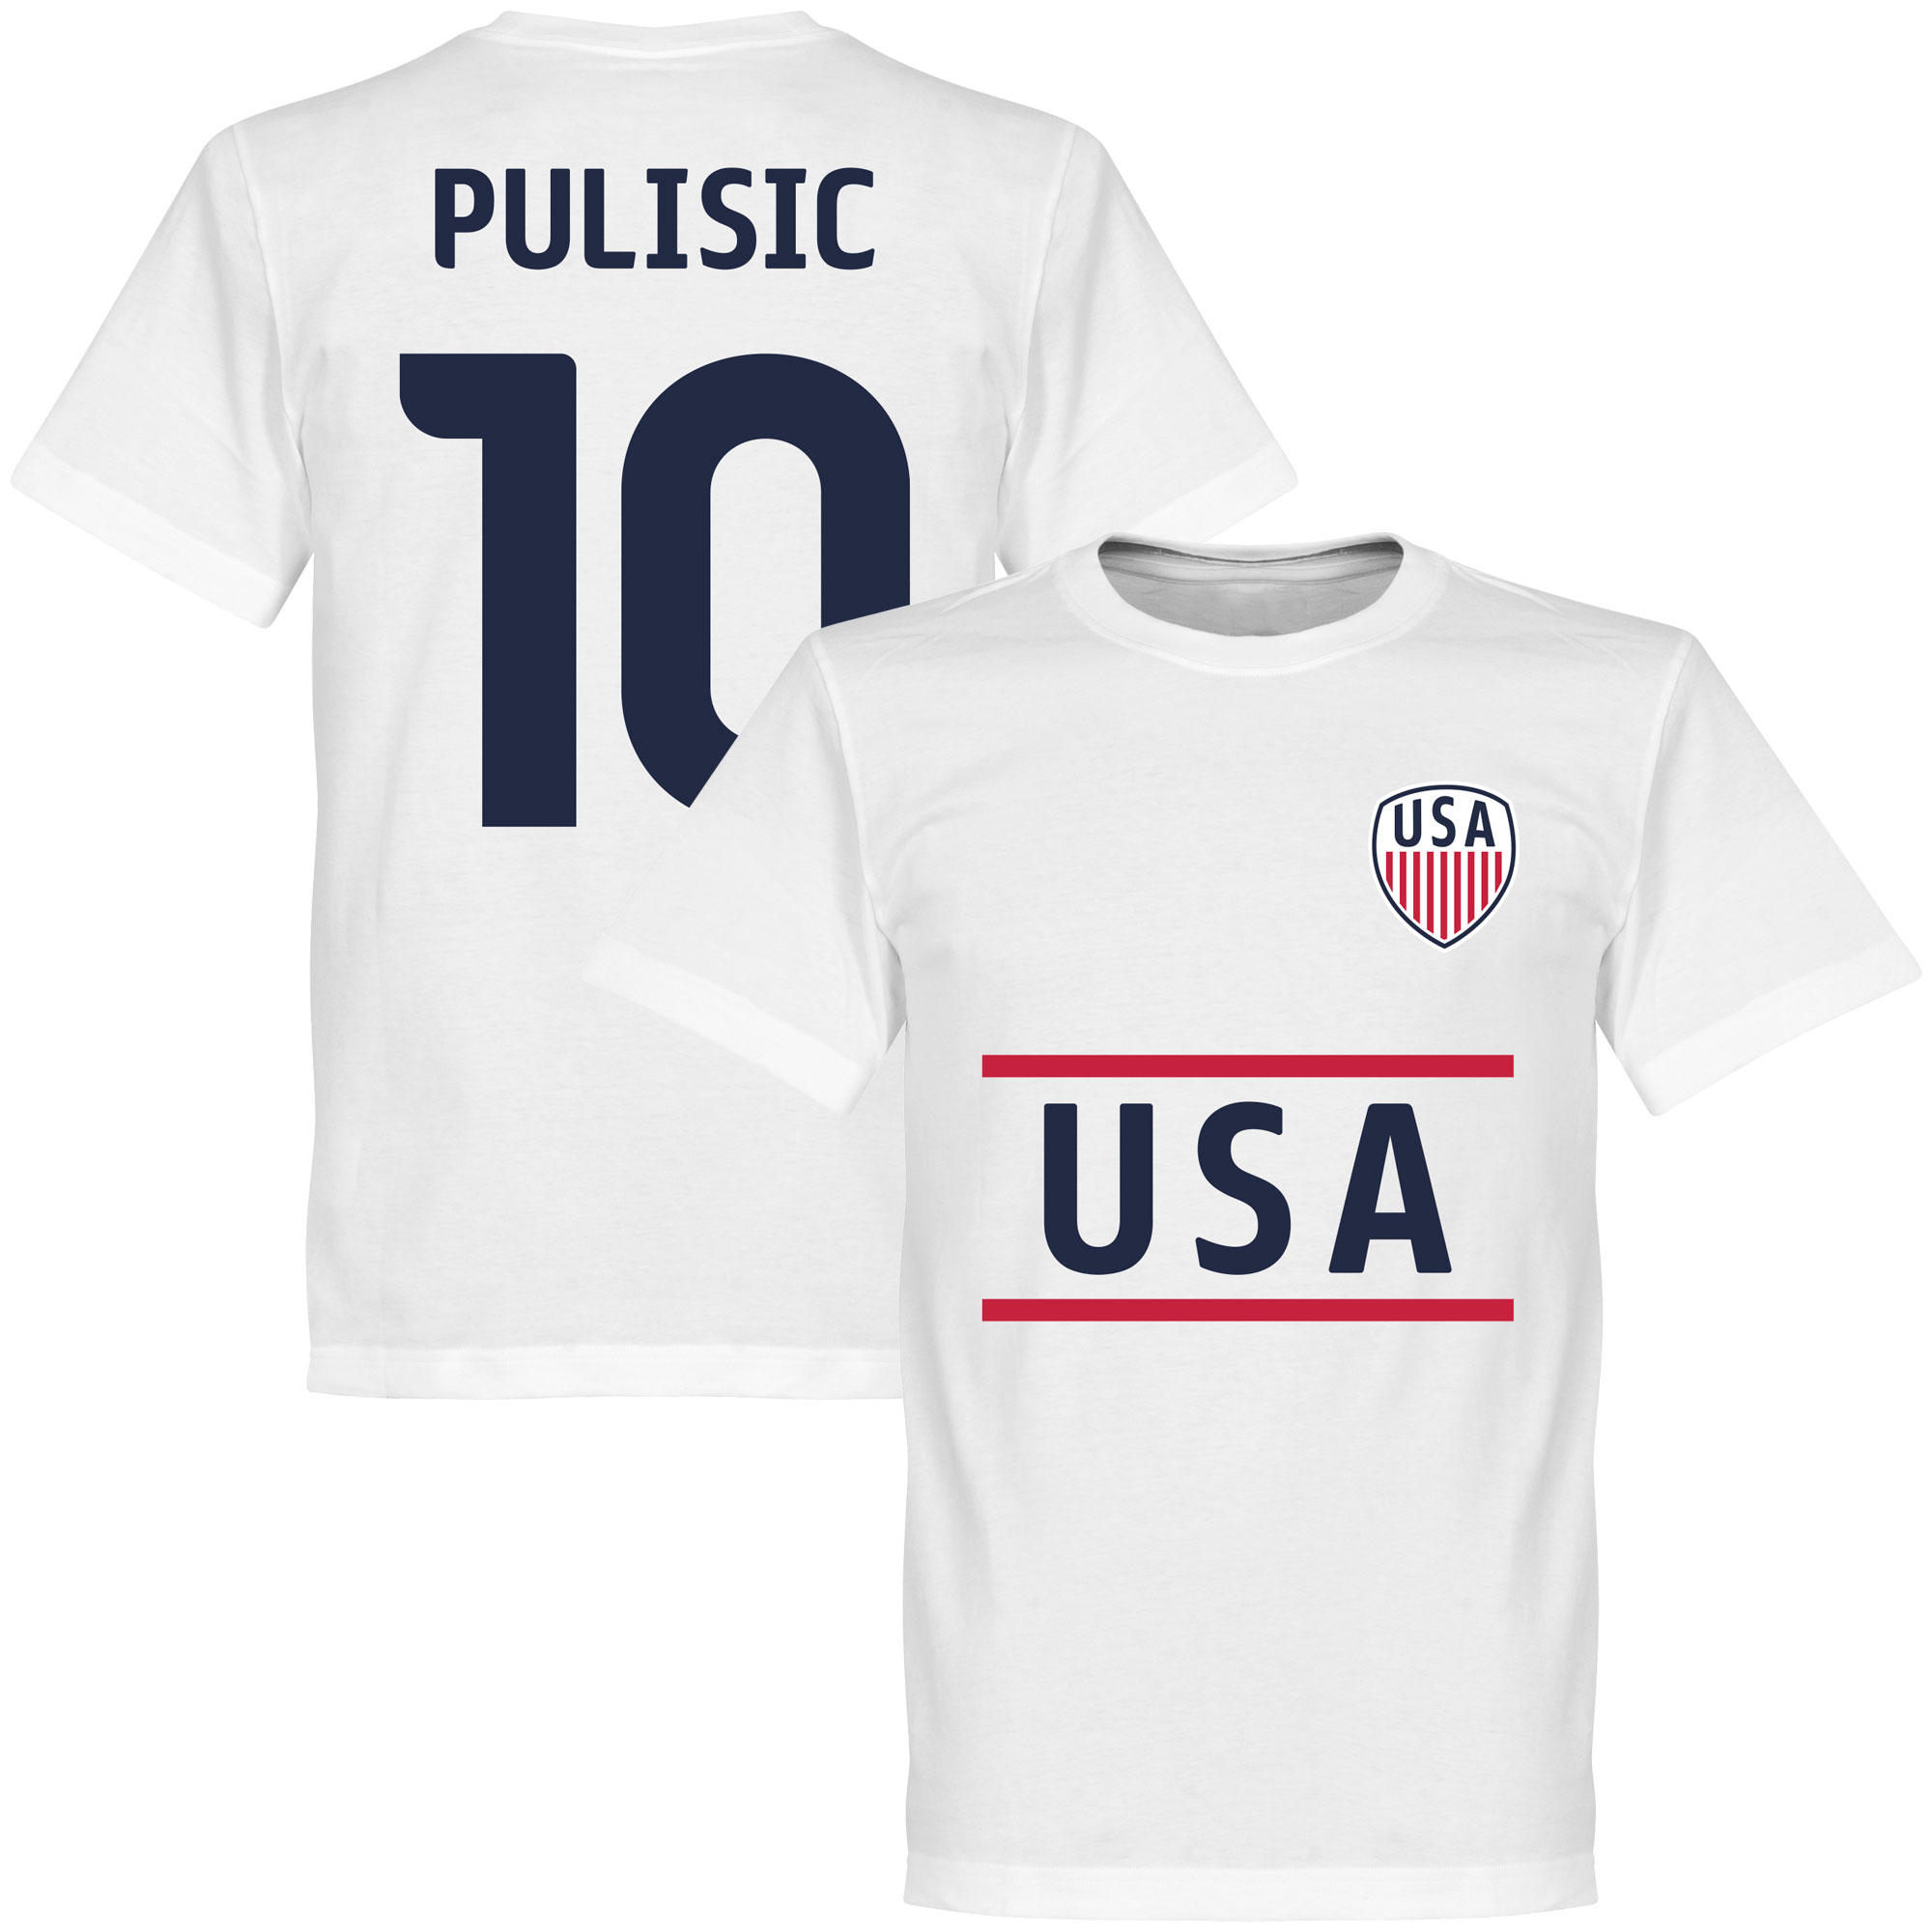 USA Pulisic 10 Team T-Shirt - S